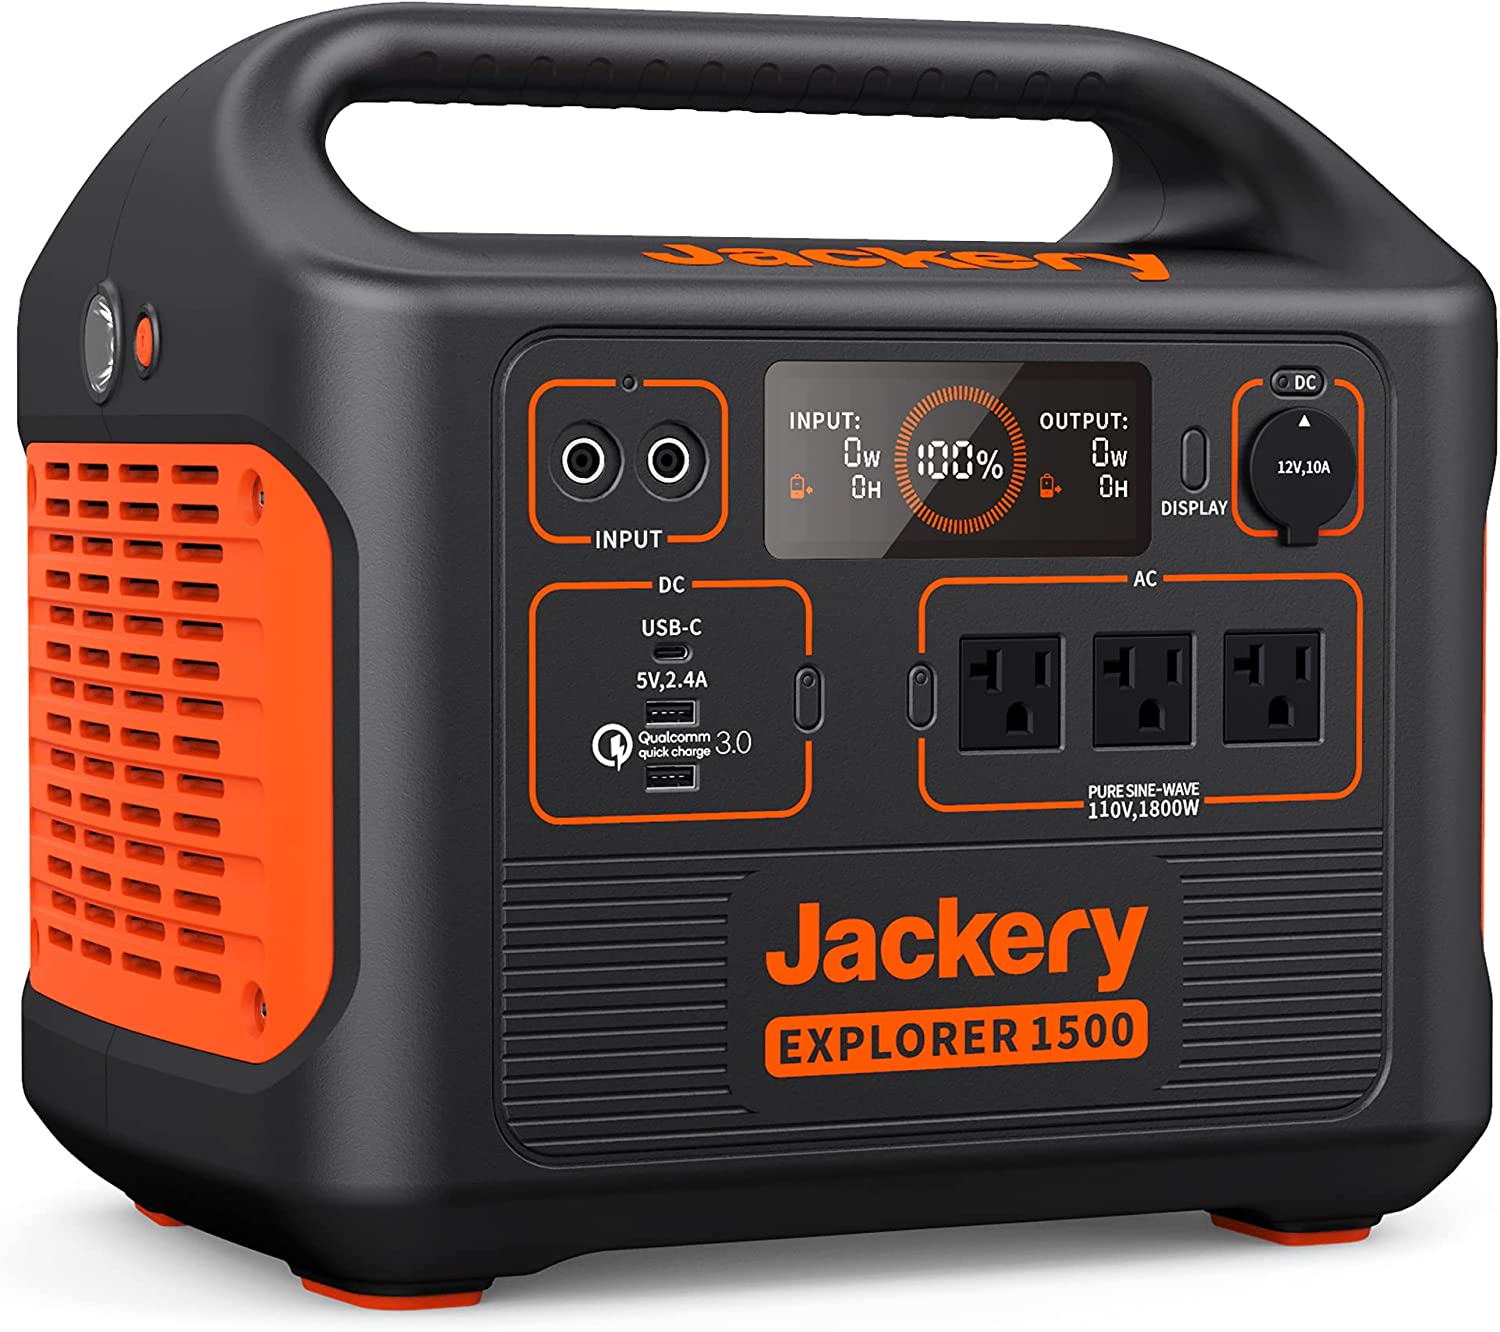 Jackery kicks off deep Cyber Monday savings on portable power stations and solar generators